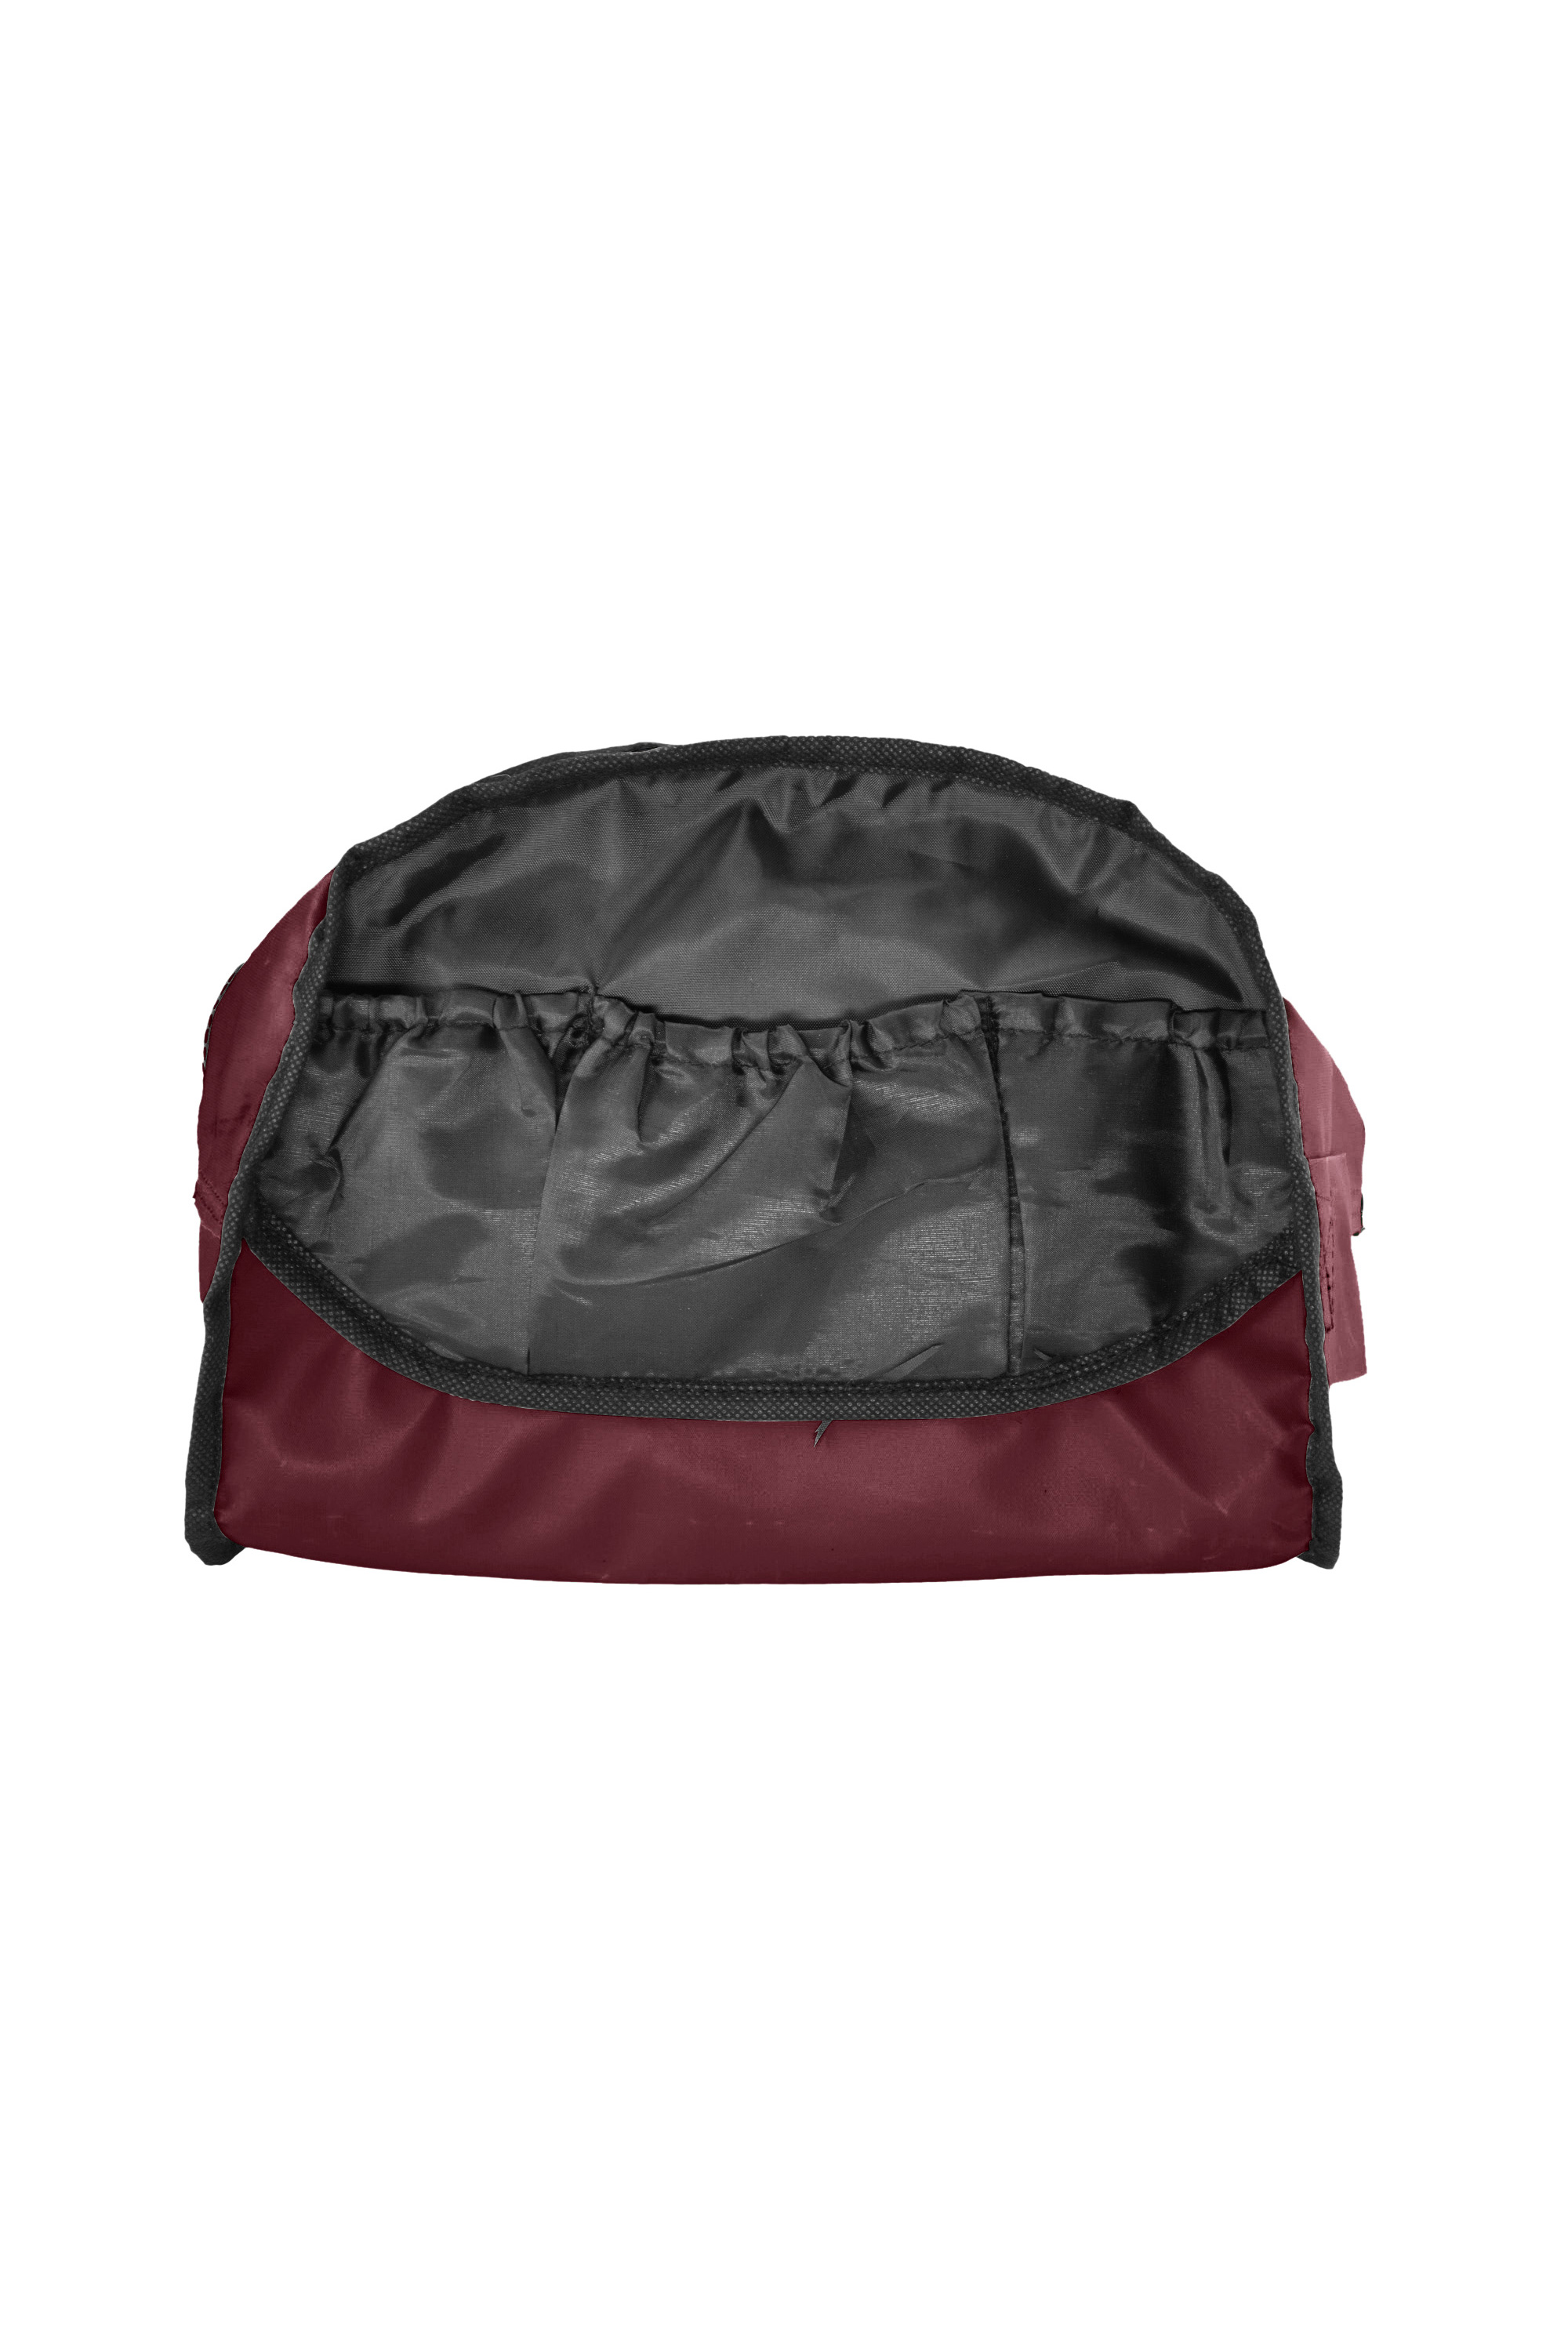 DALIX 12" Mini Duffel Bag Gym Duffle in Maroon - image 2 of 7